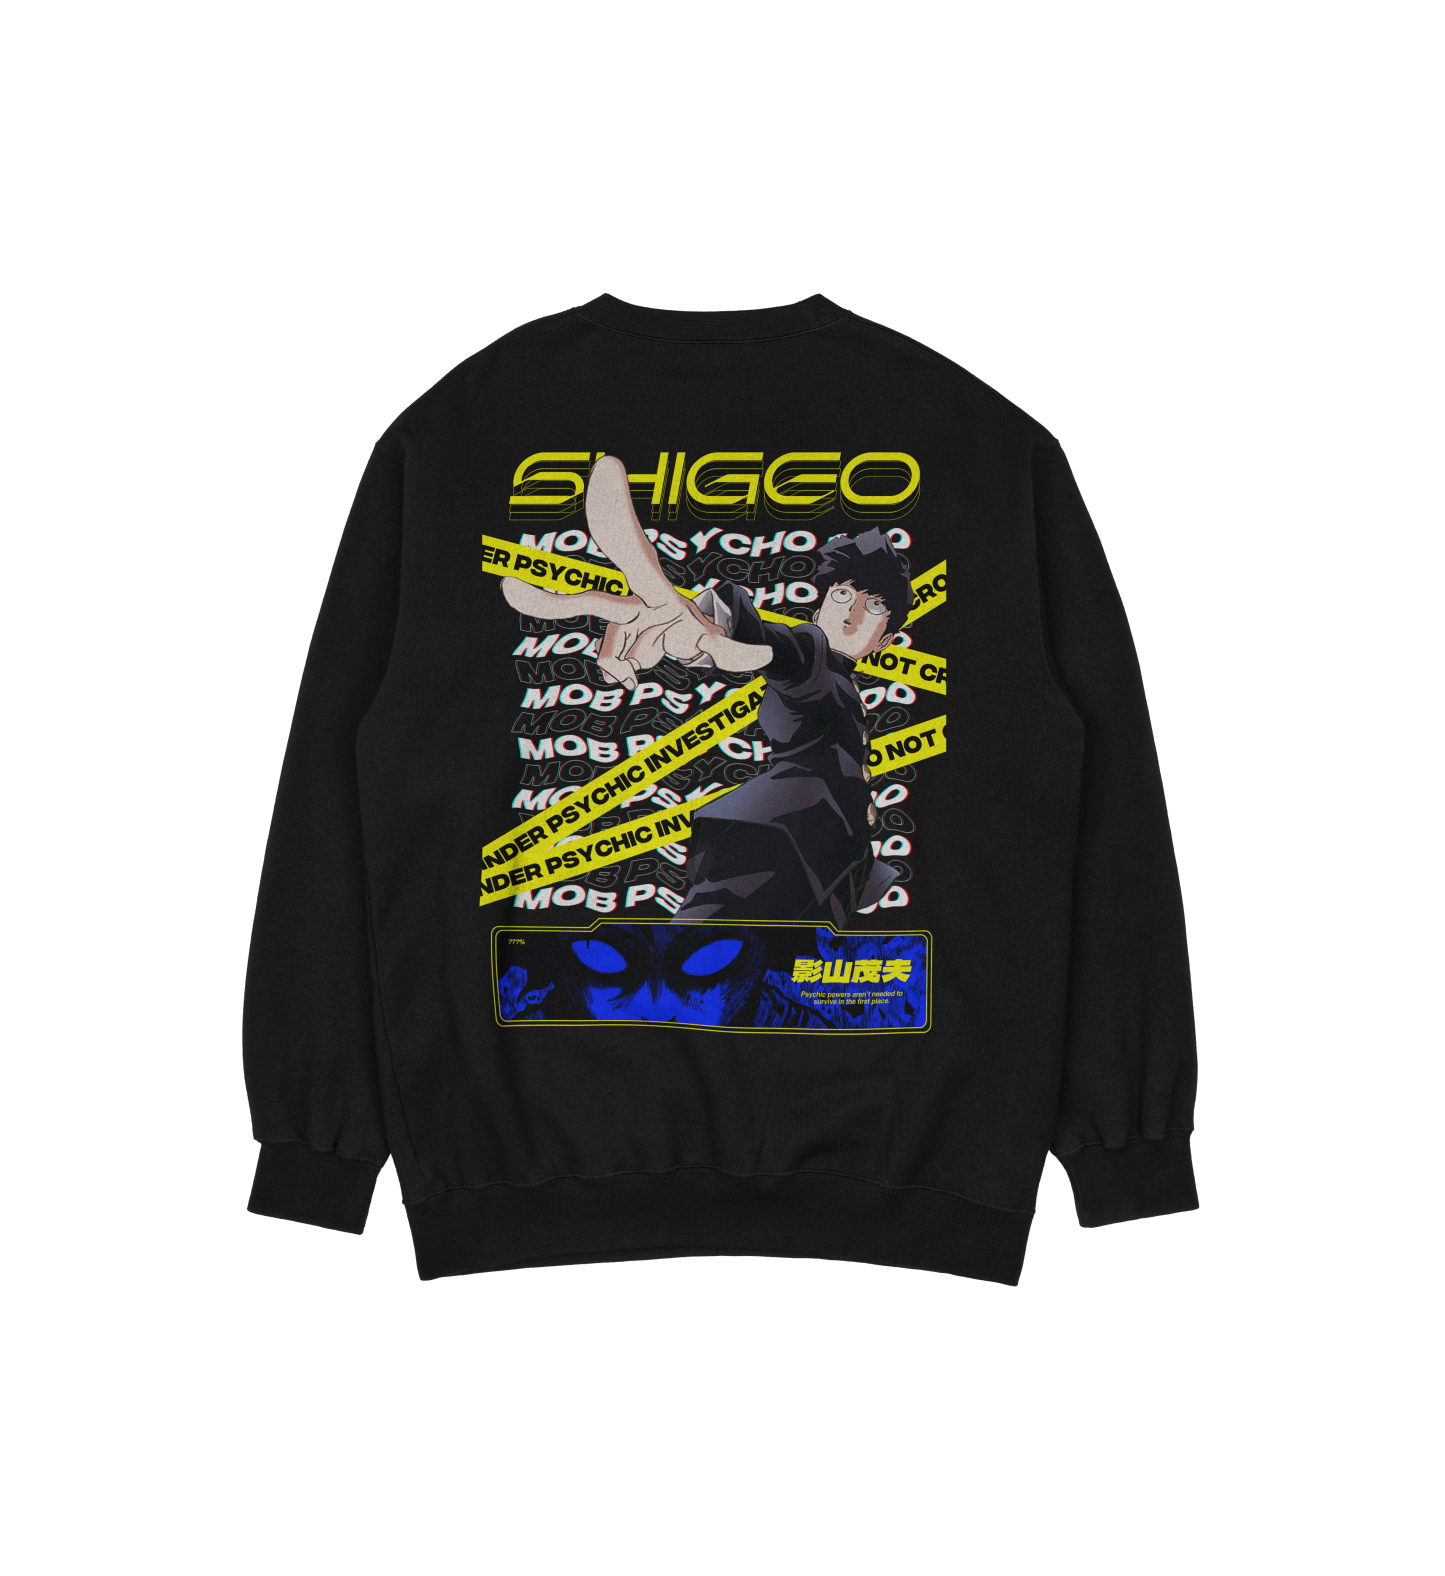 Shiggo Mob Psycho 100 | Sweatshirt